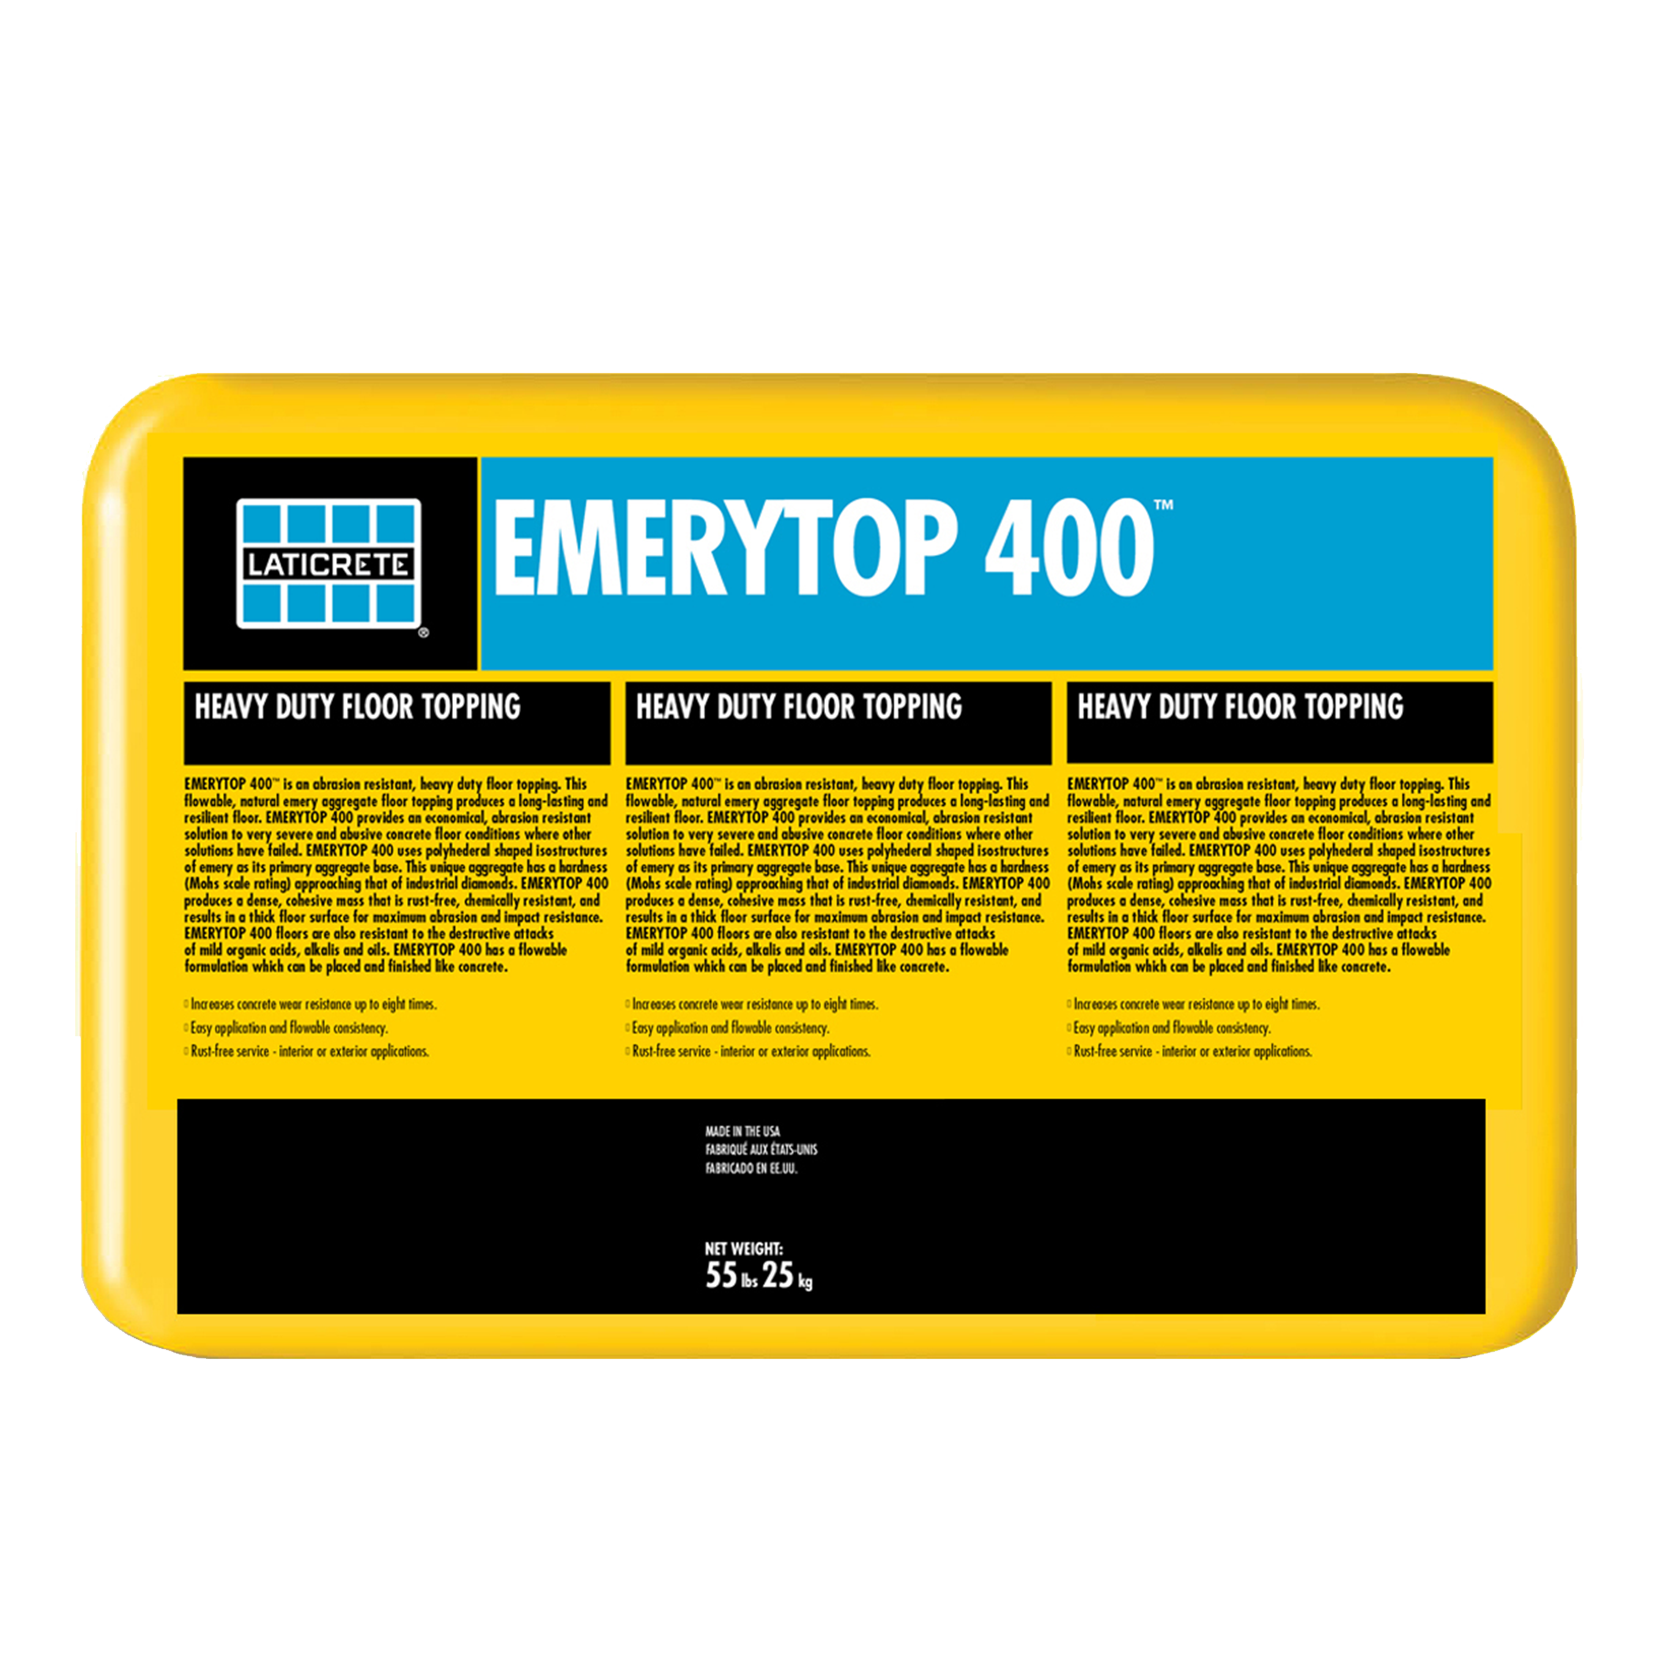 EmeryTop 400